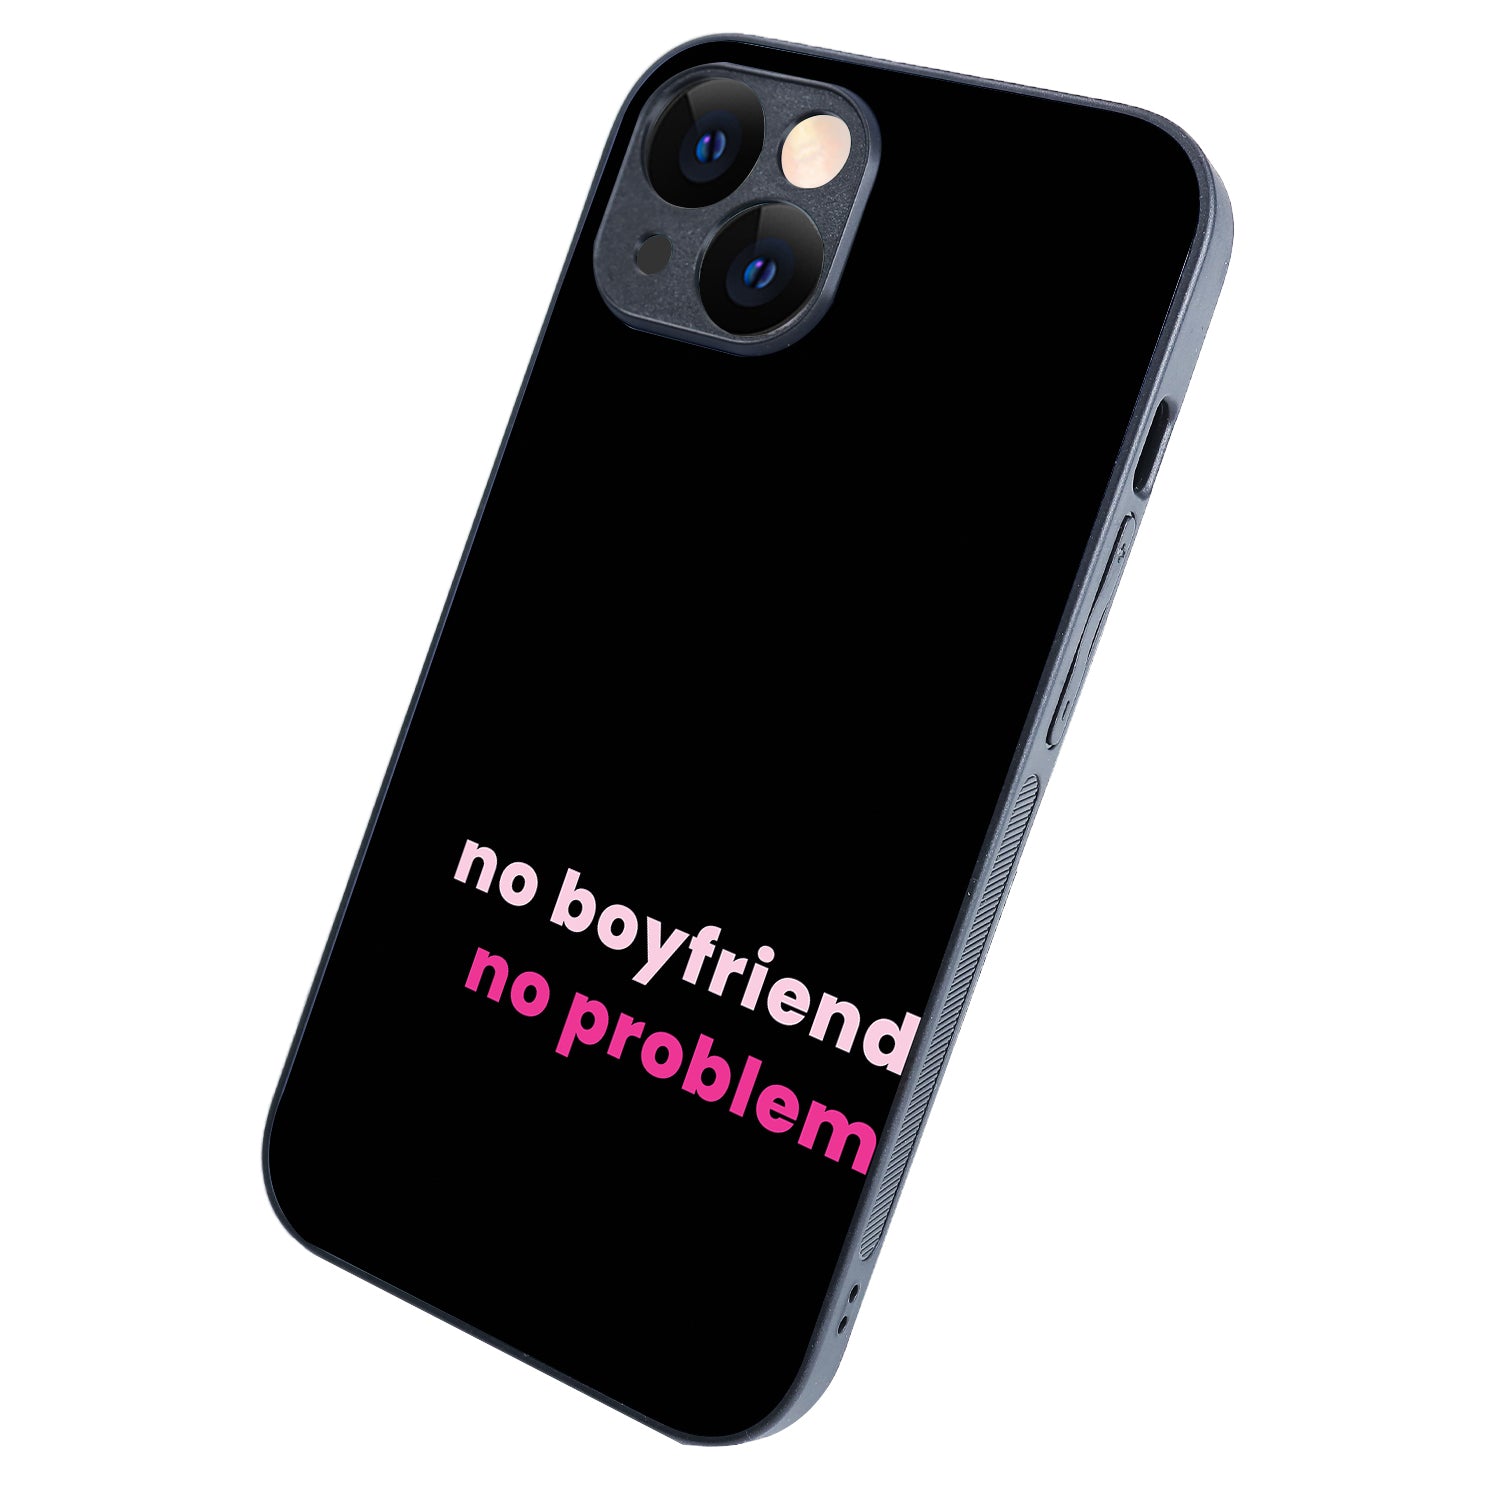 No Boyfriend Motivational Quotes iPhone 14 Case